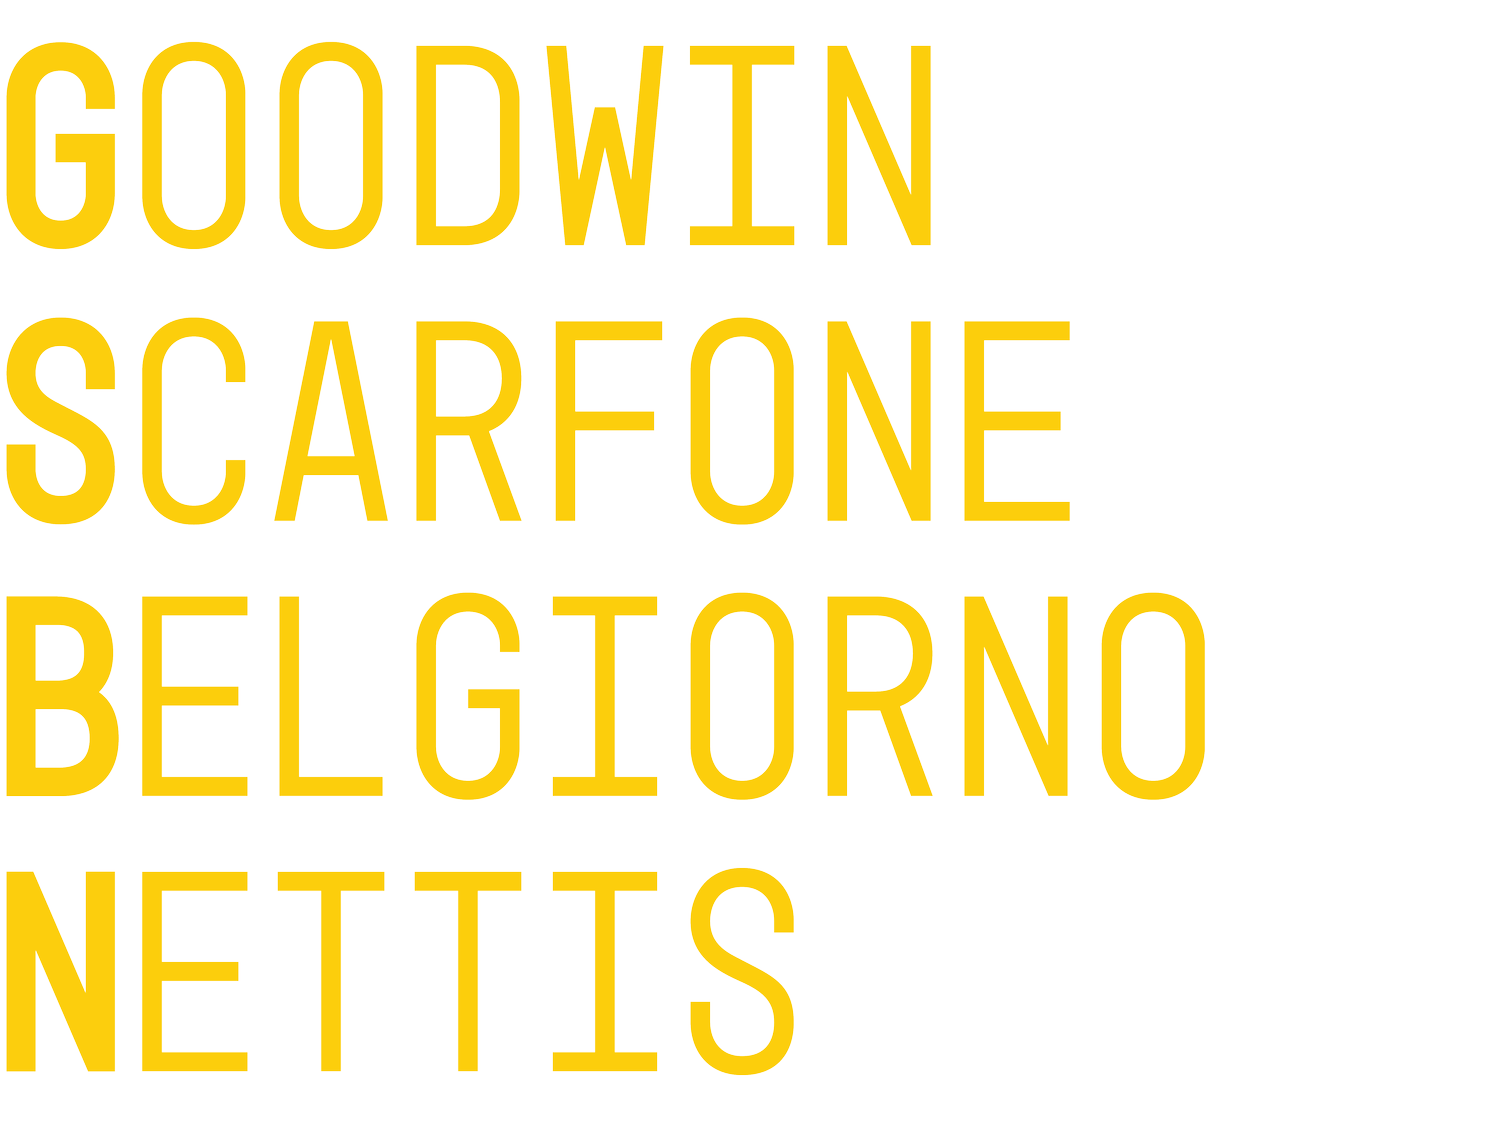 GOODWIN SCARFONE BELGIORNO-NETTIS